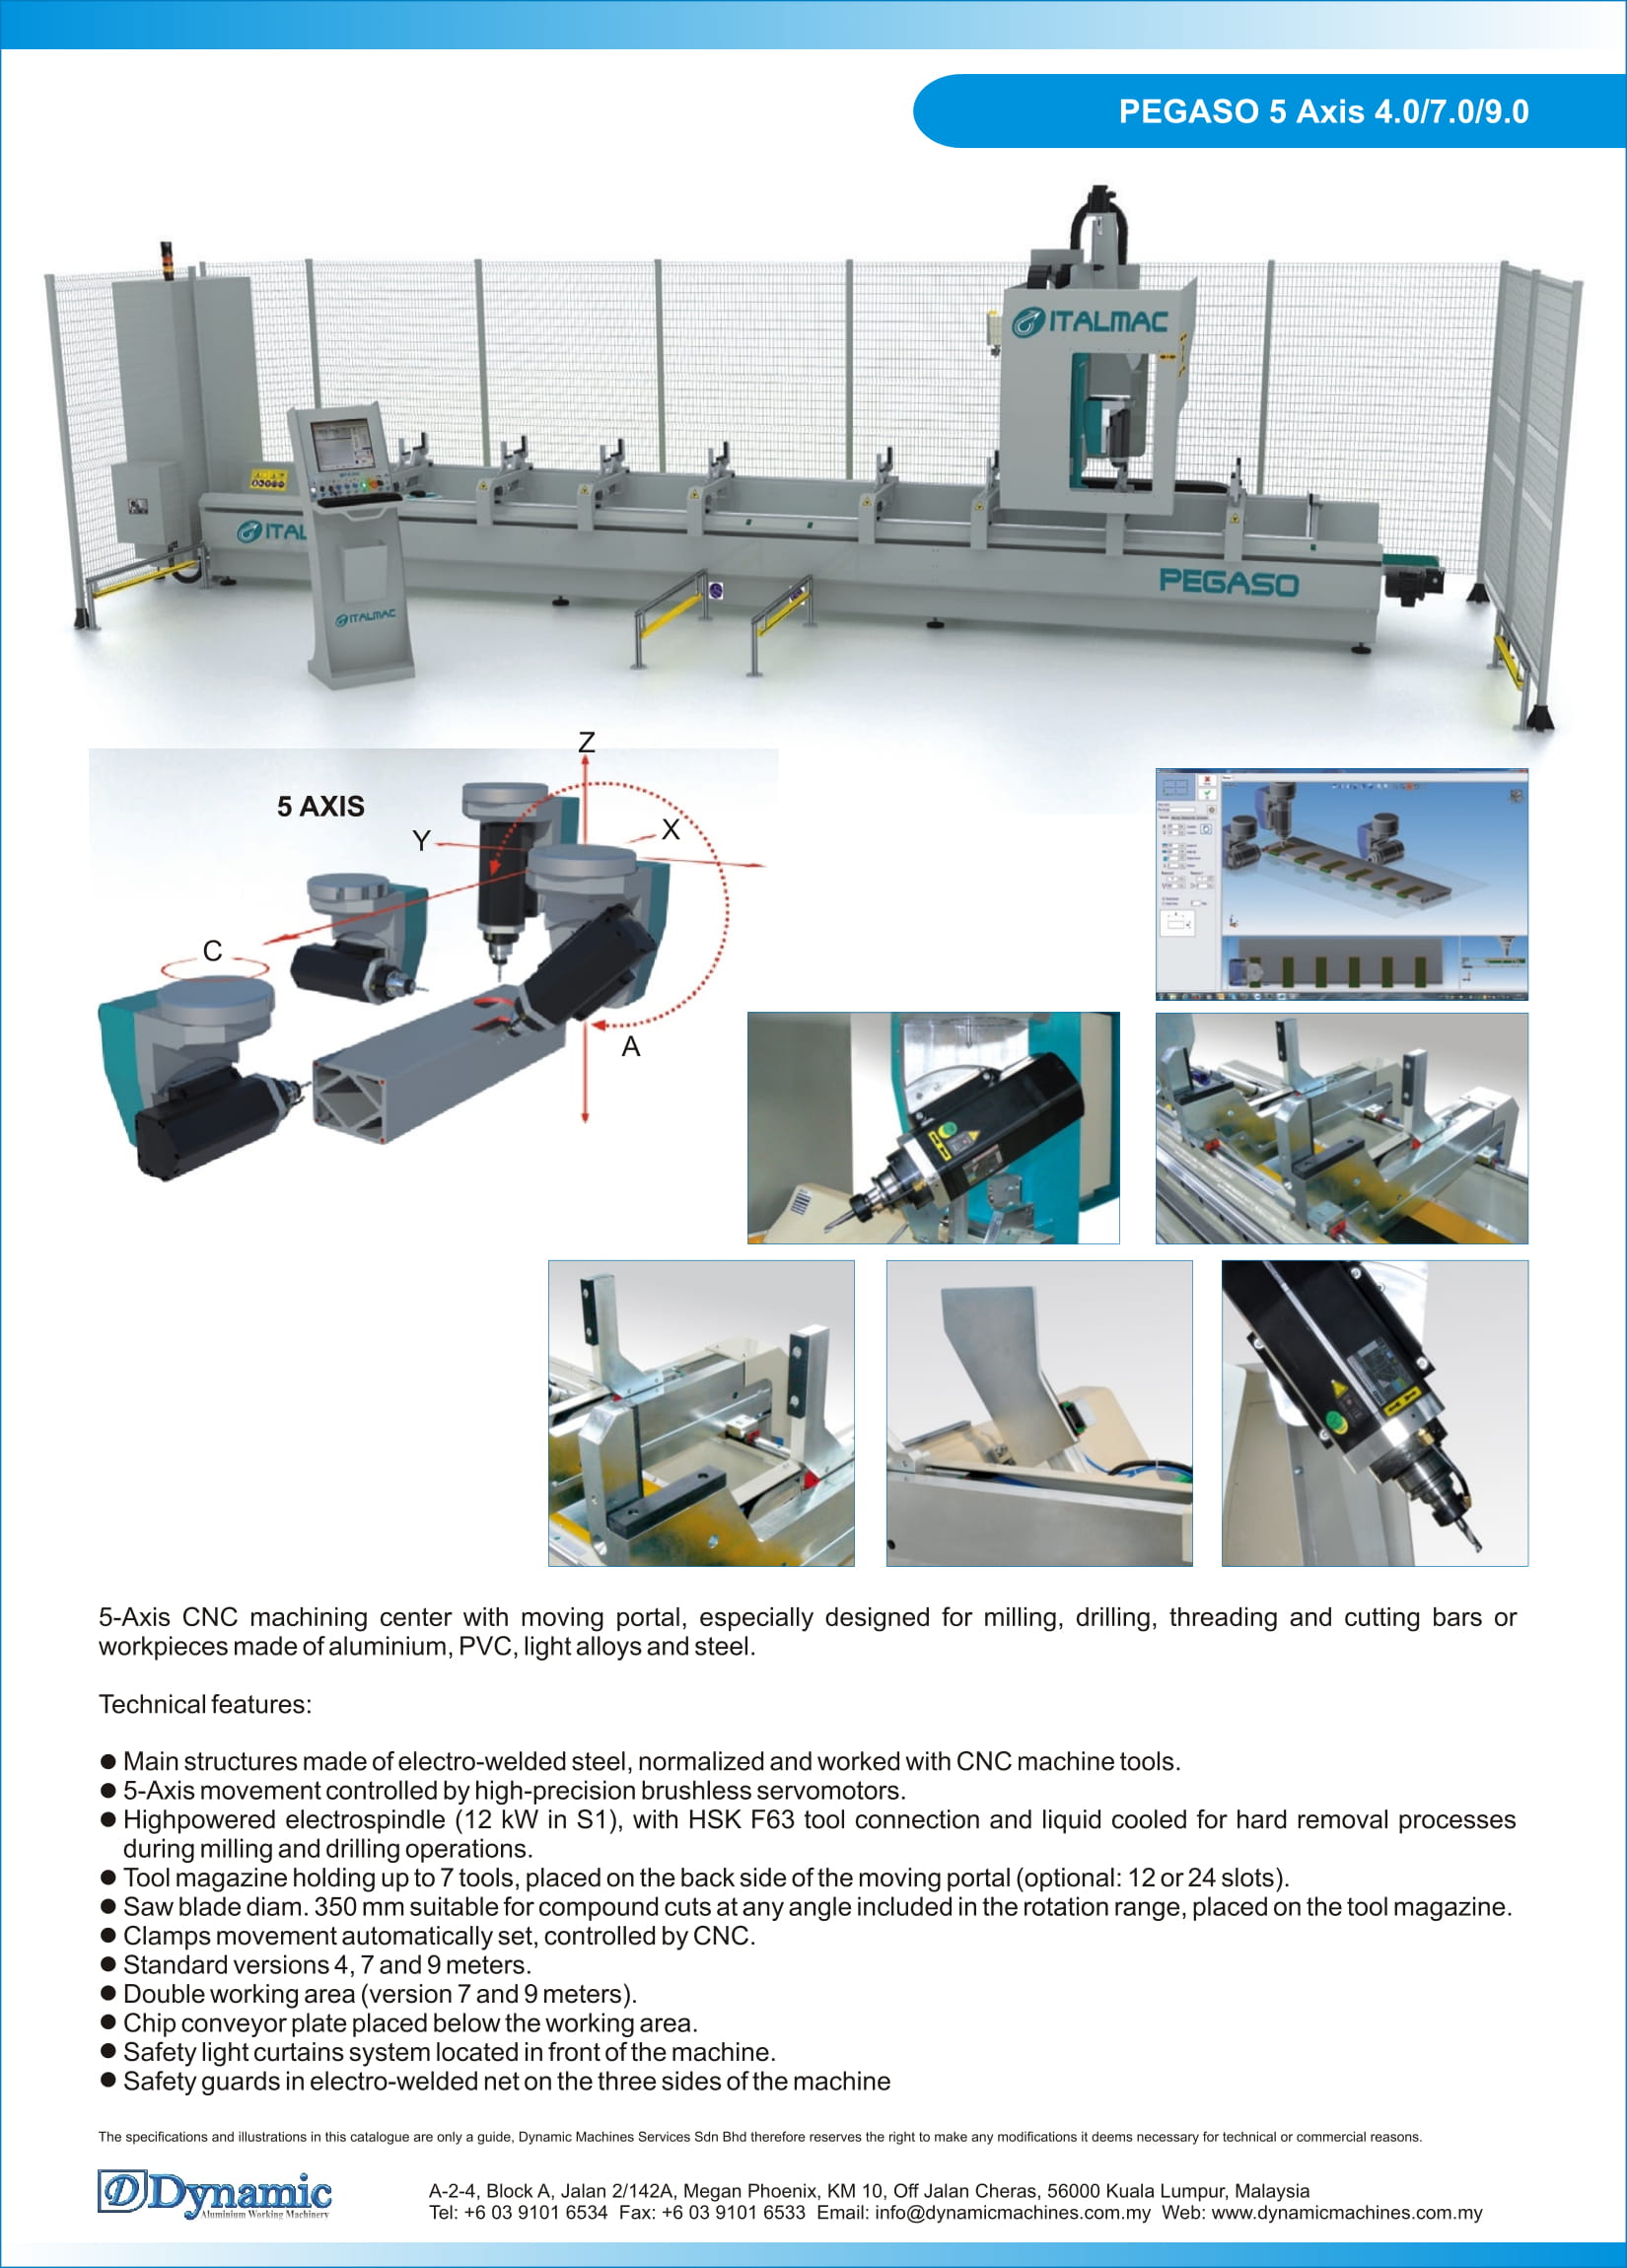 Pegaso 5 Axis CNC Machine Center